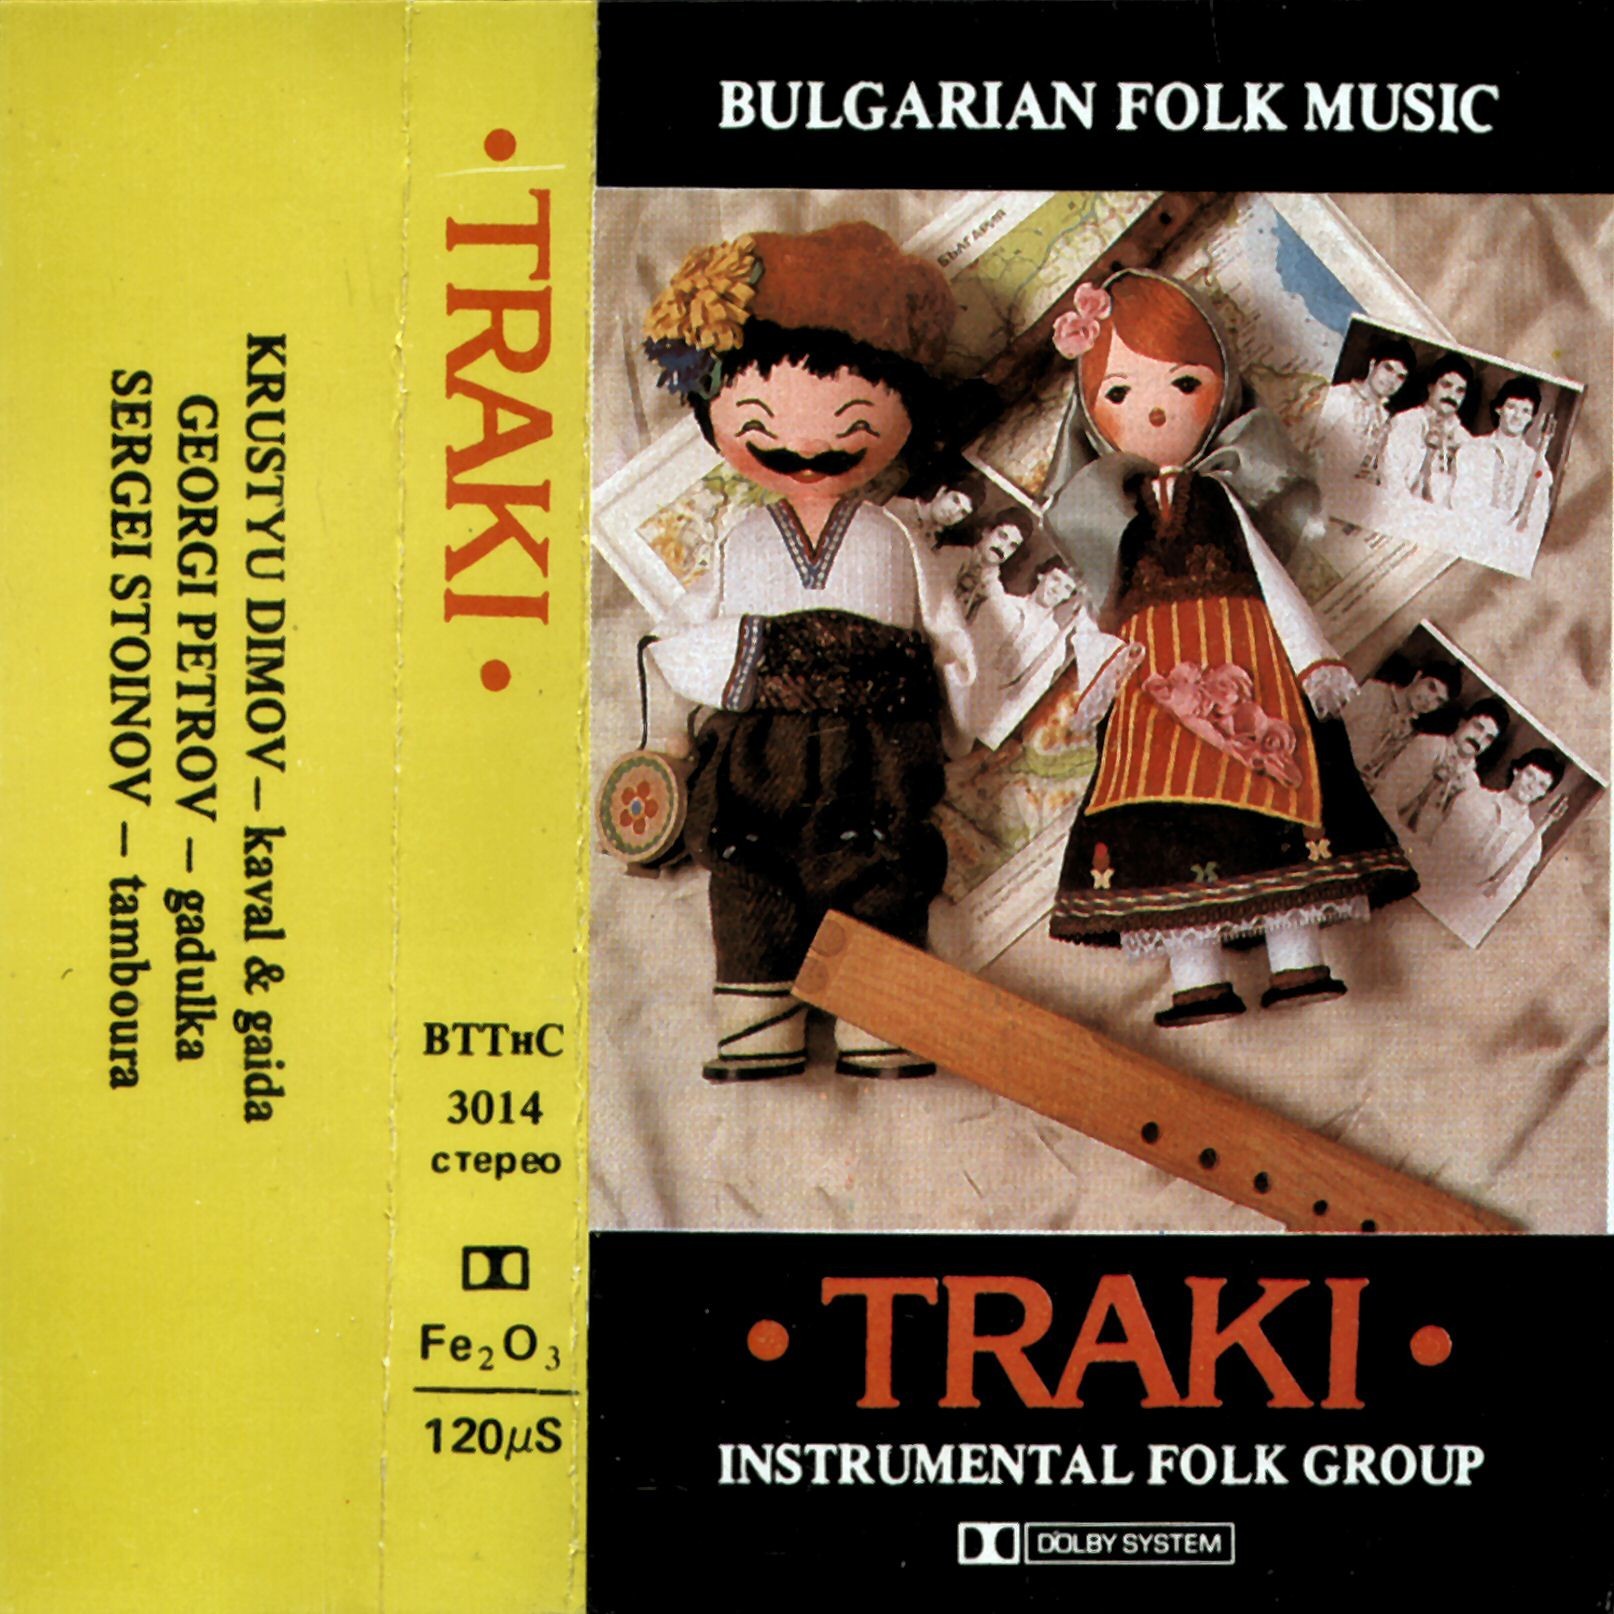 Traki: Instrumental Folk Group